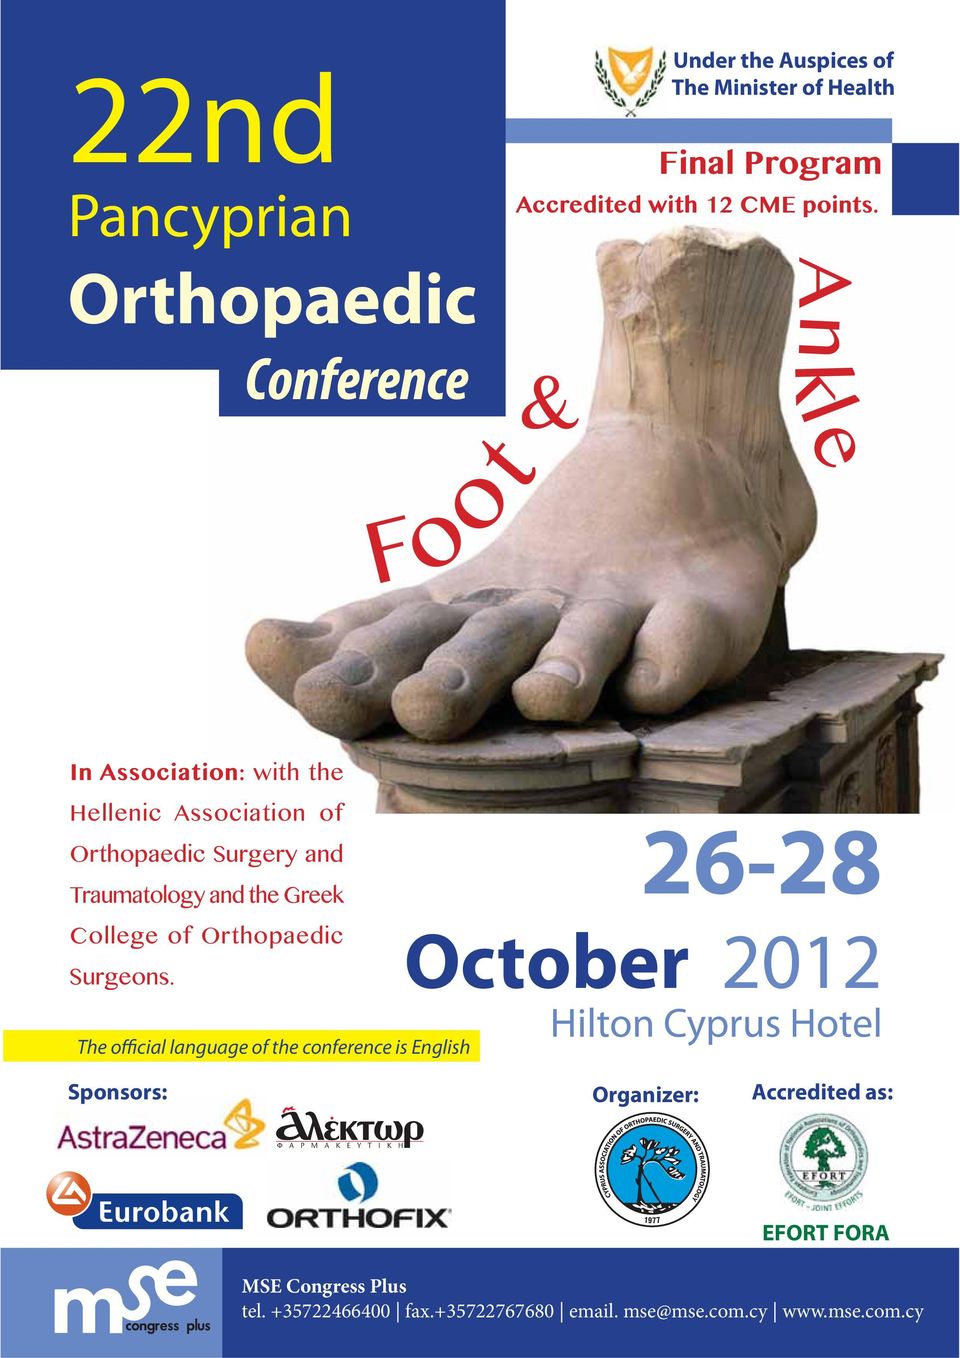 Traumatology and the Greek College of Orthopaedic Surgeons.